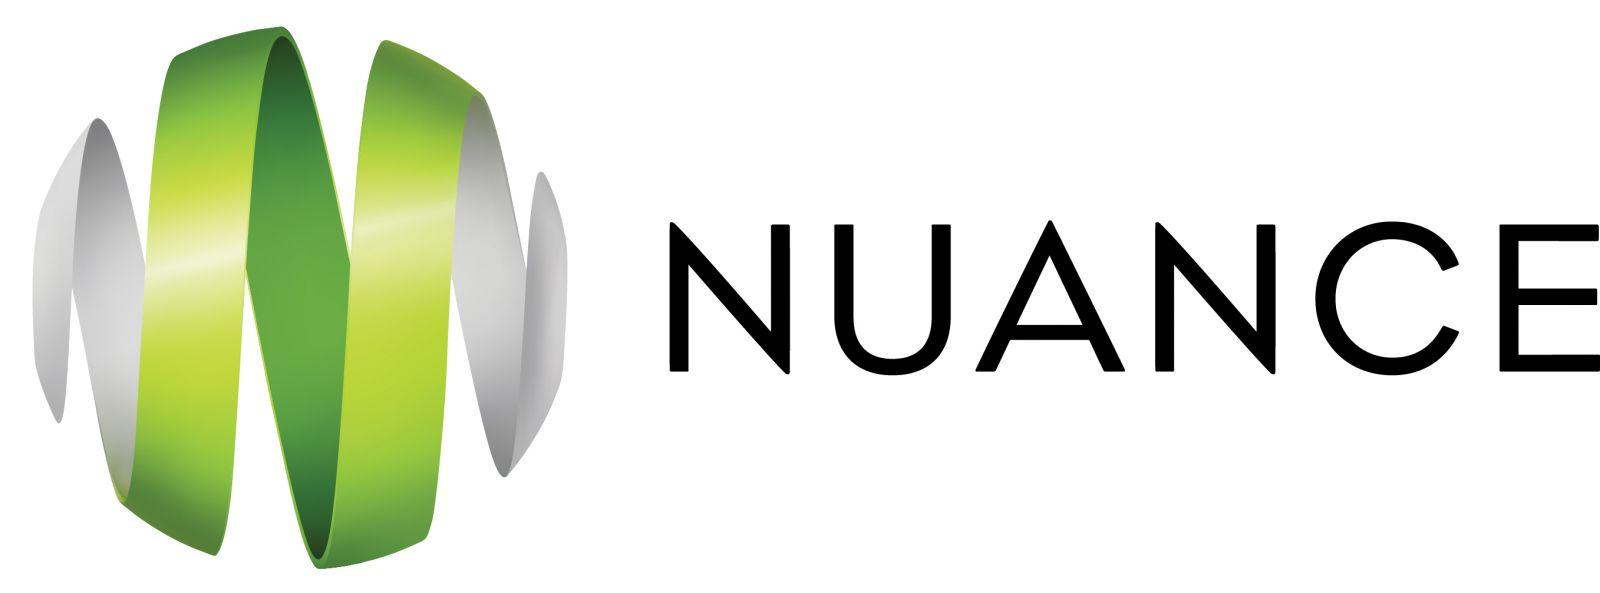 Nuance Logo - Nuance Logos